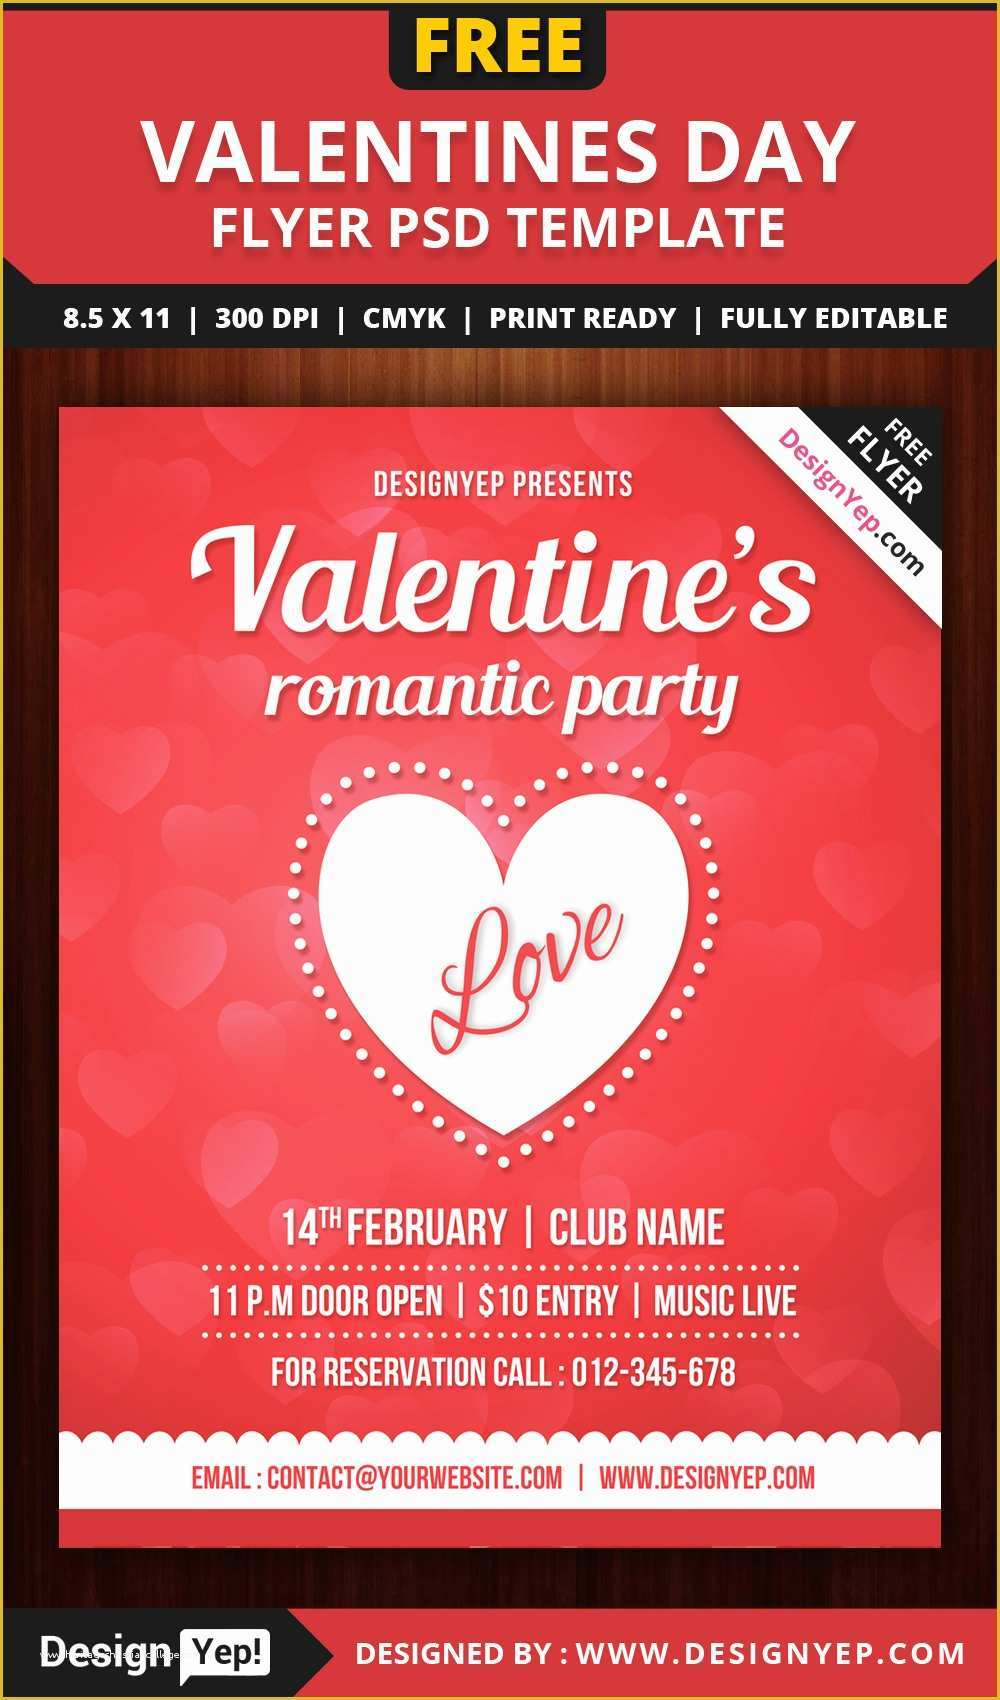 Celebration Flyer Template Free Of Free Valentines Party Flyer Template Psd Designyep